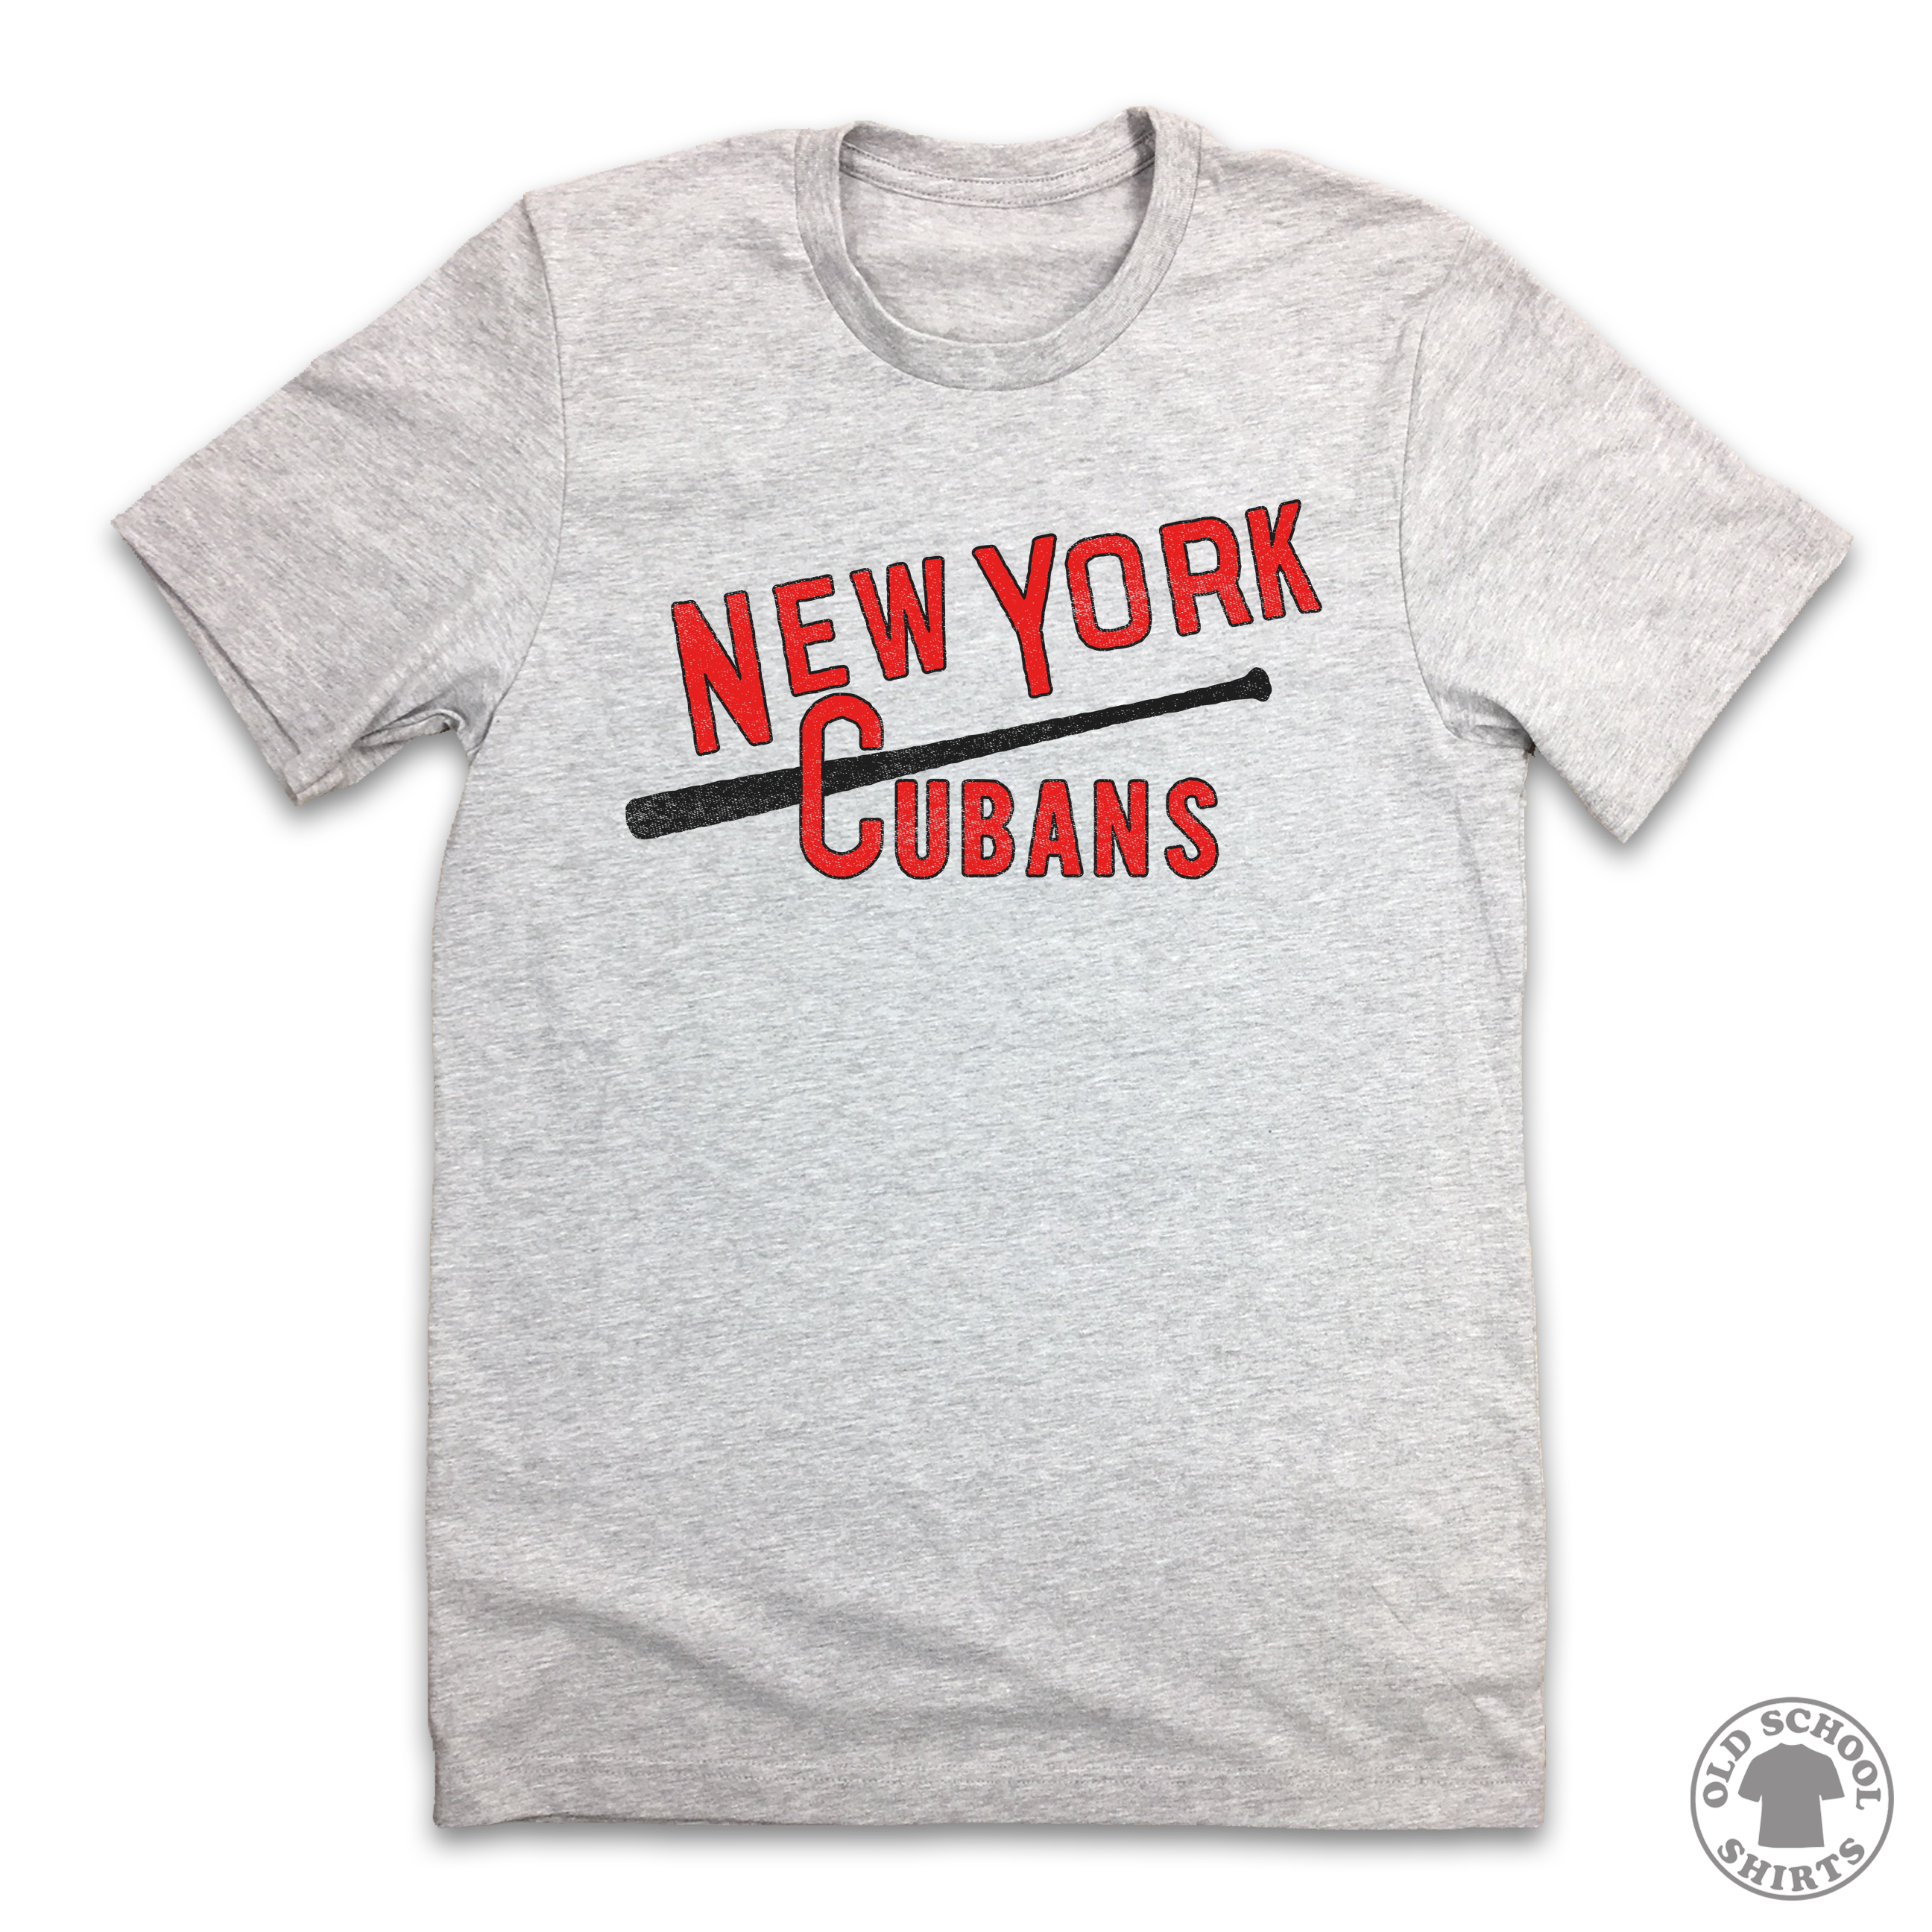 New York Cubans tee